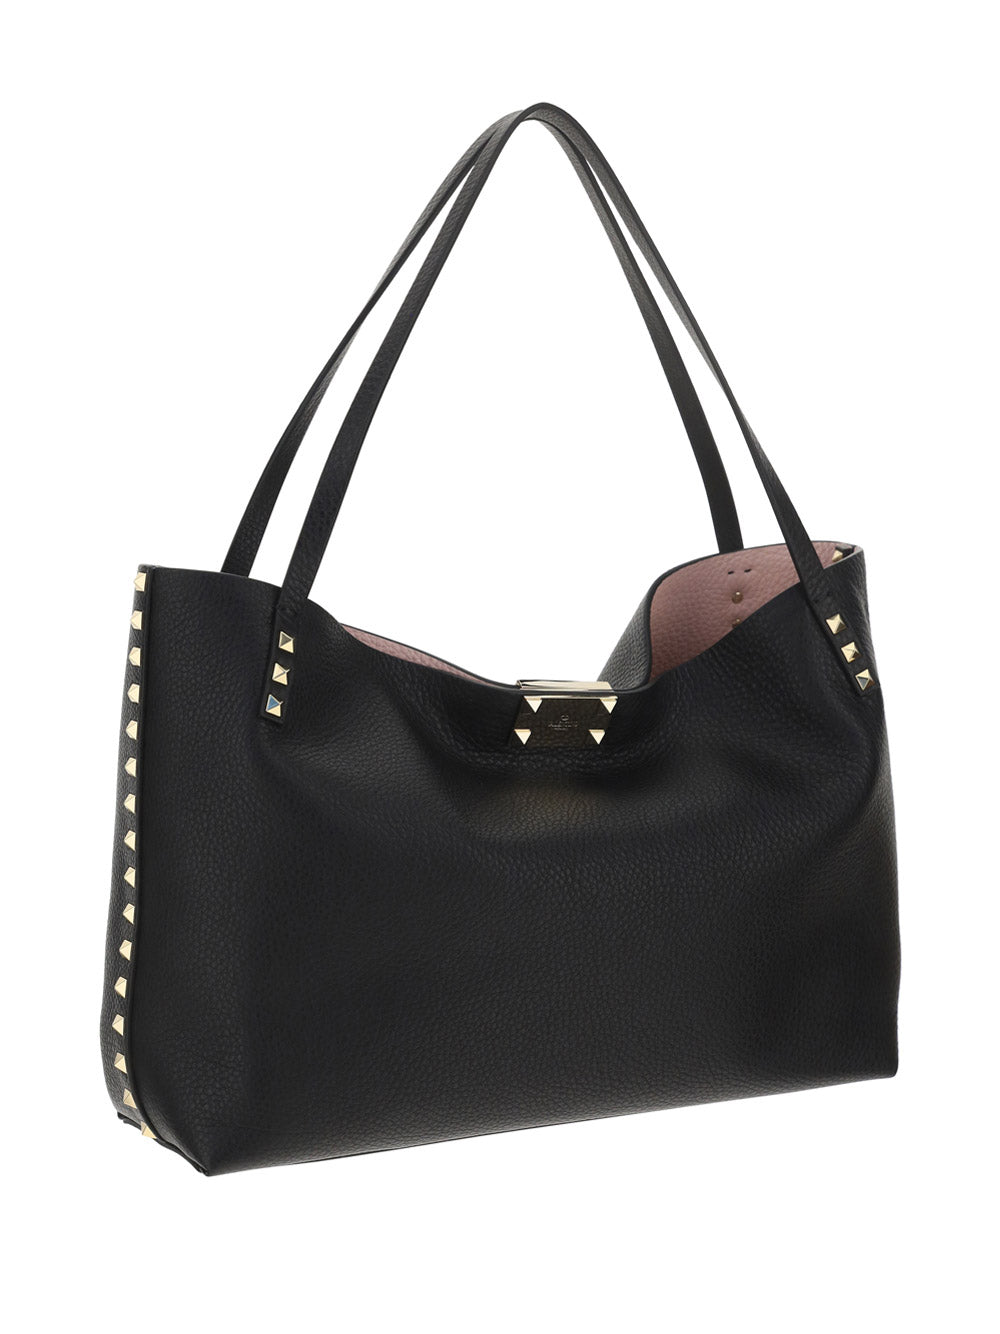 Medium Rockstud Bag in Grainy Calfskin with Contrasting Lining - Black